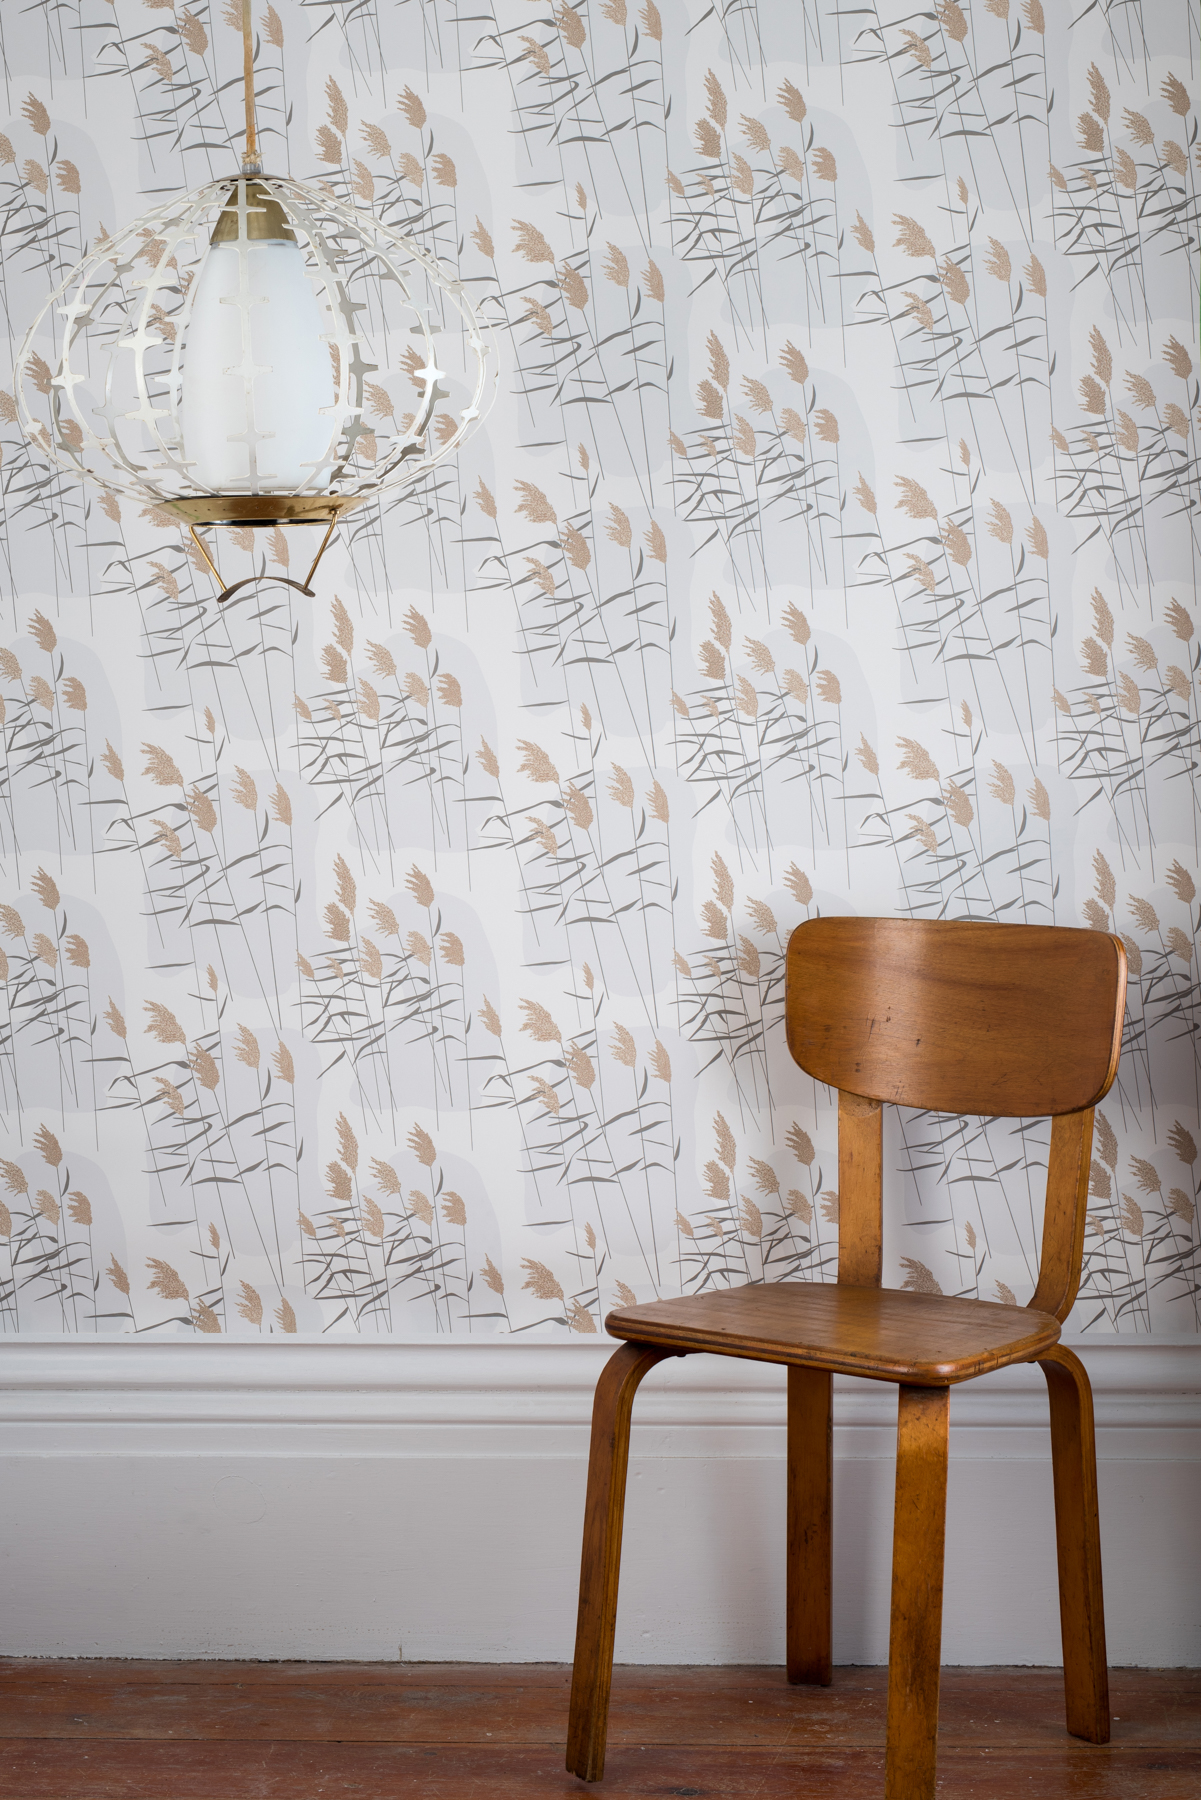 Kate Golding Grasses (Dawn) wallpaper // Modern wallcoverings and interior decor.